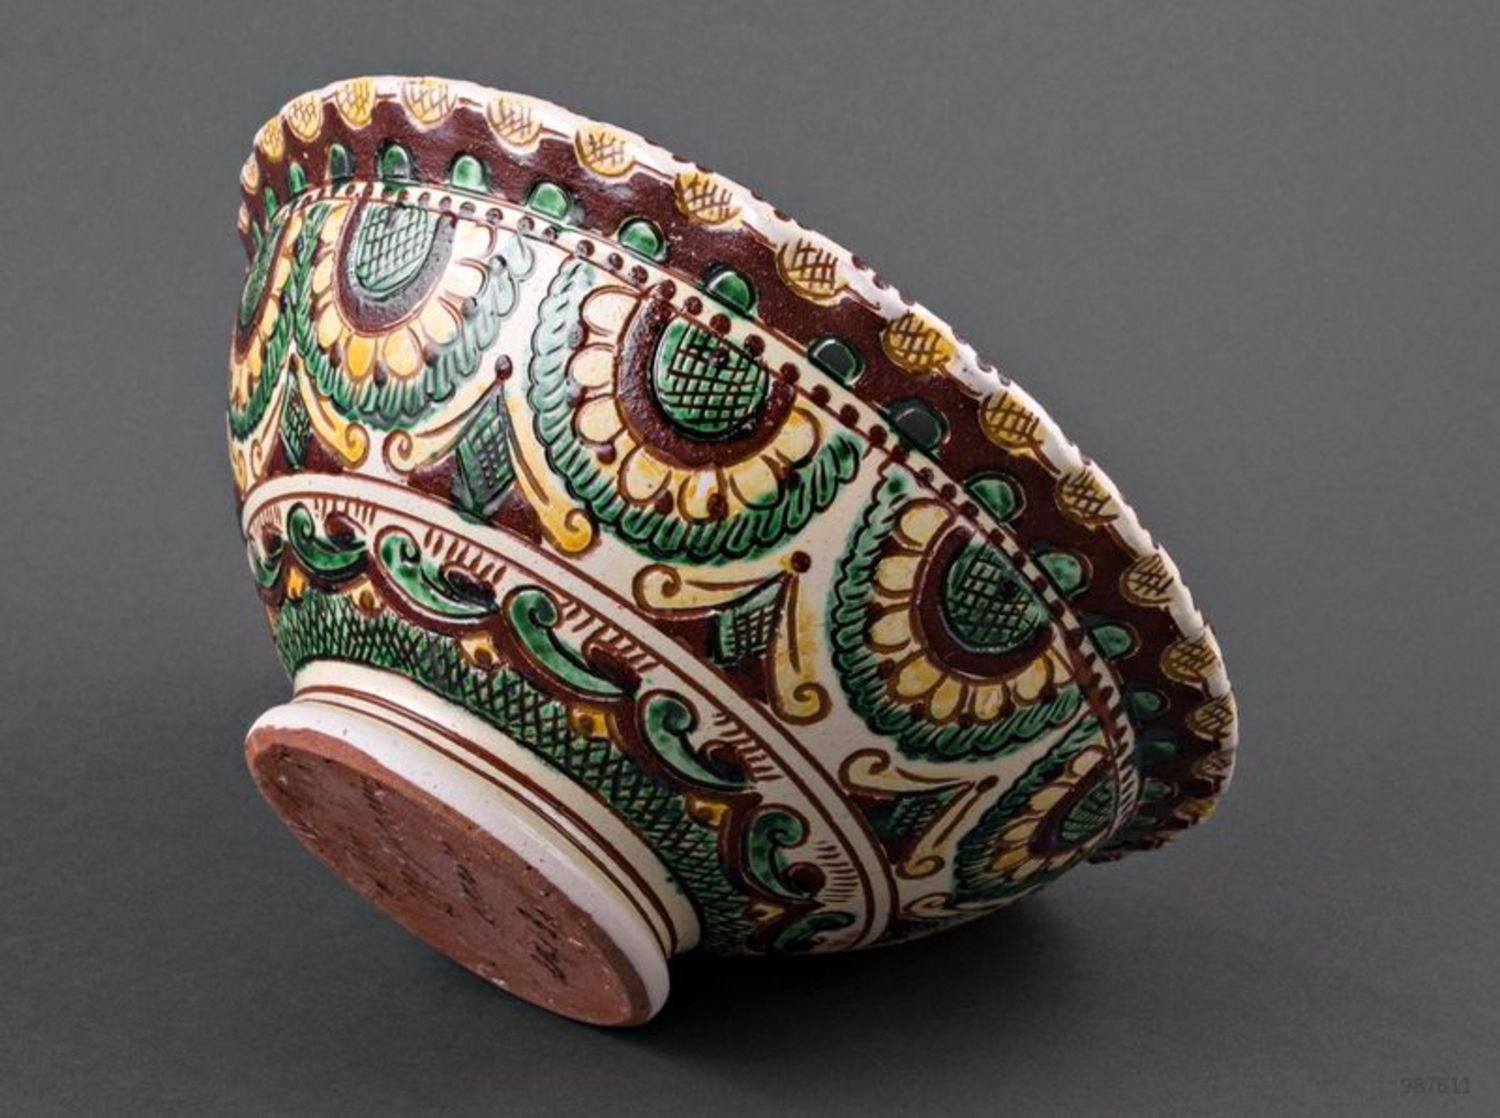 Decorative ceramic bowl photo 1